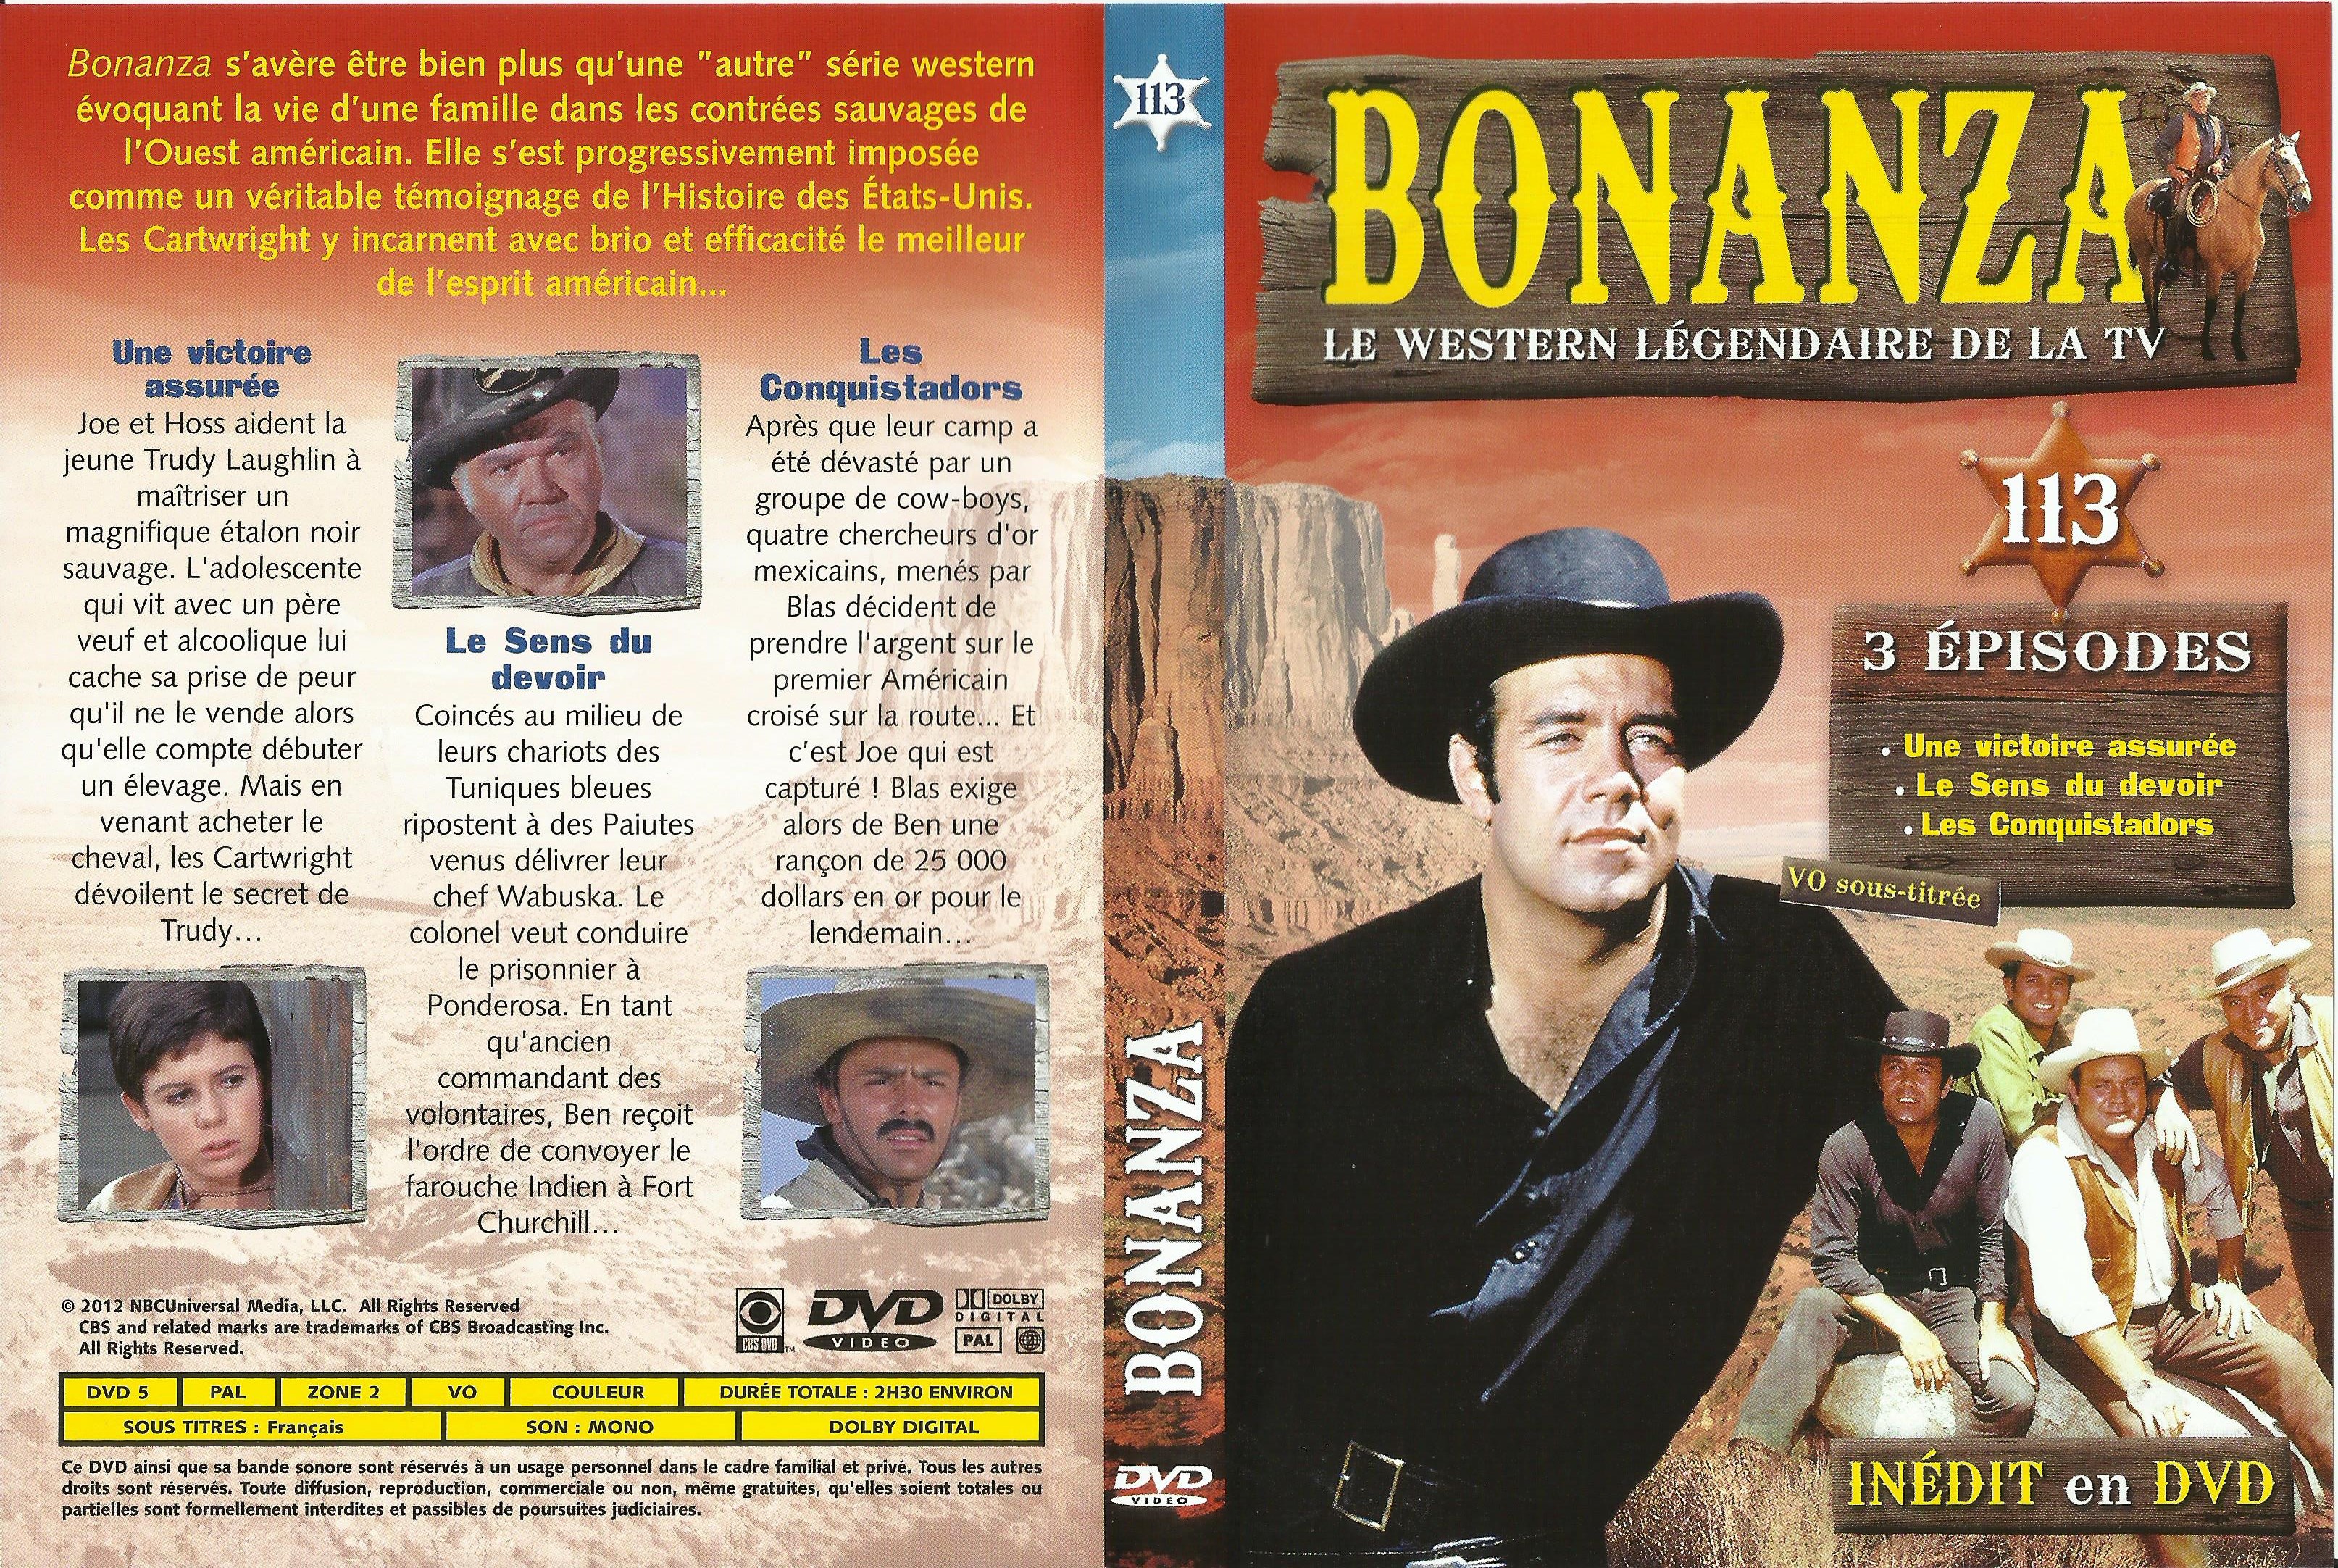 Jaquette DVD Bonanza vol 113